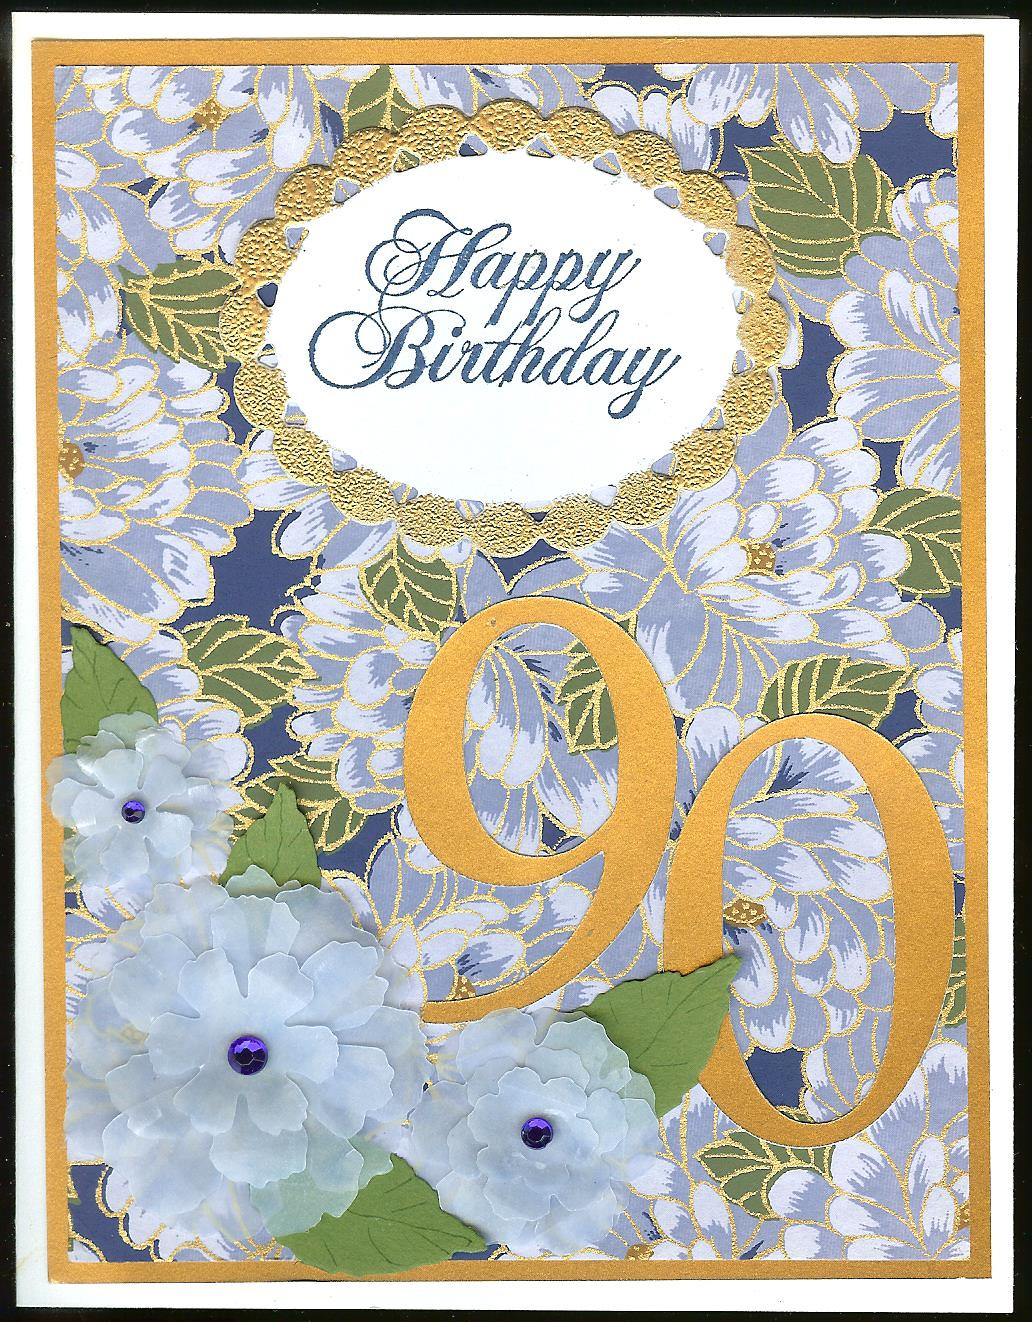 Best ideas about 90th Birthday Card
. Save or Pin Krisha s Keepsakes 90th Birthday Card Now.